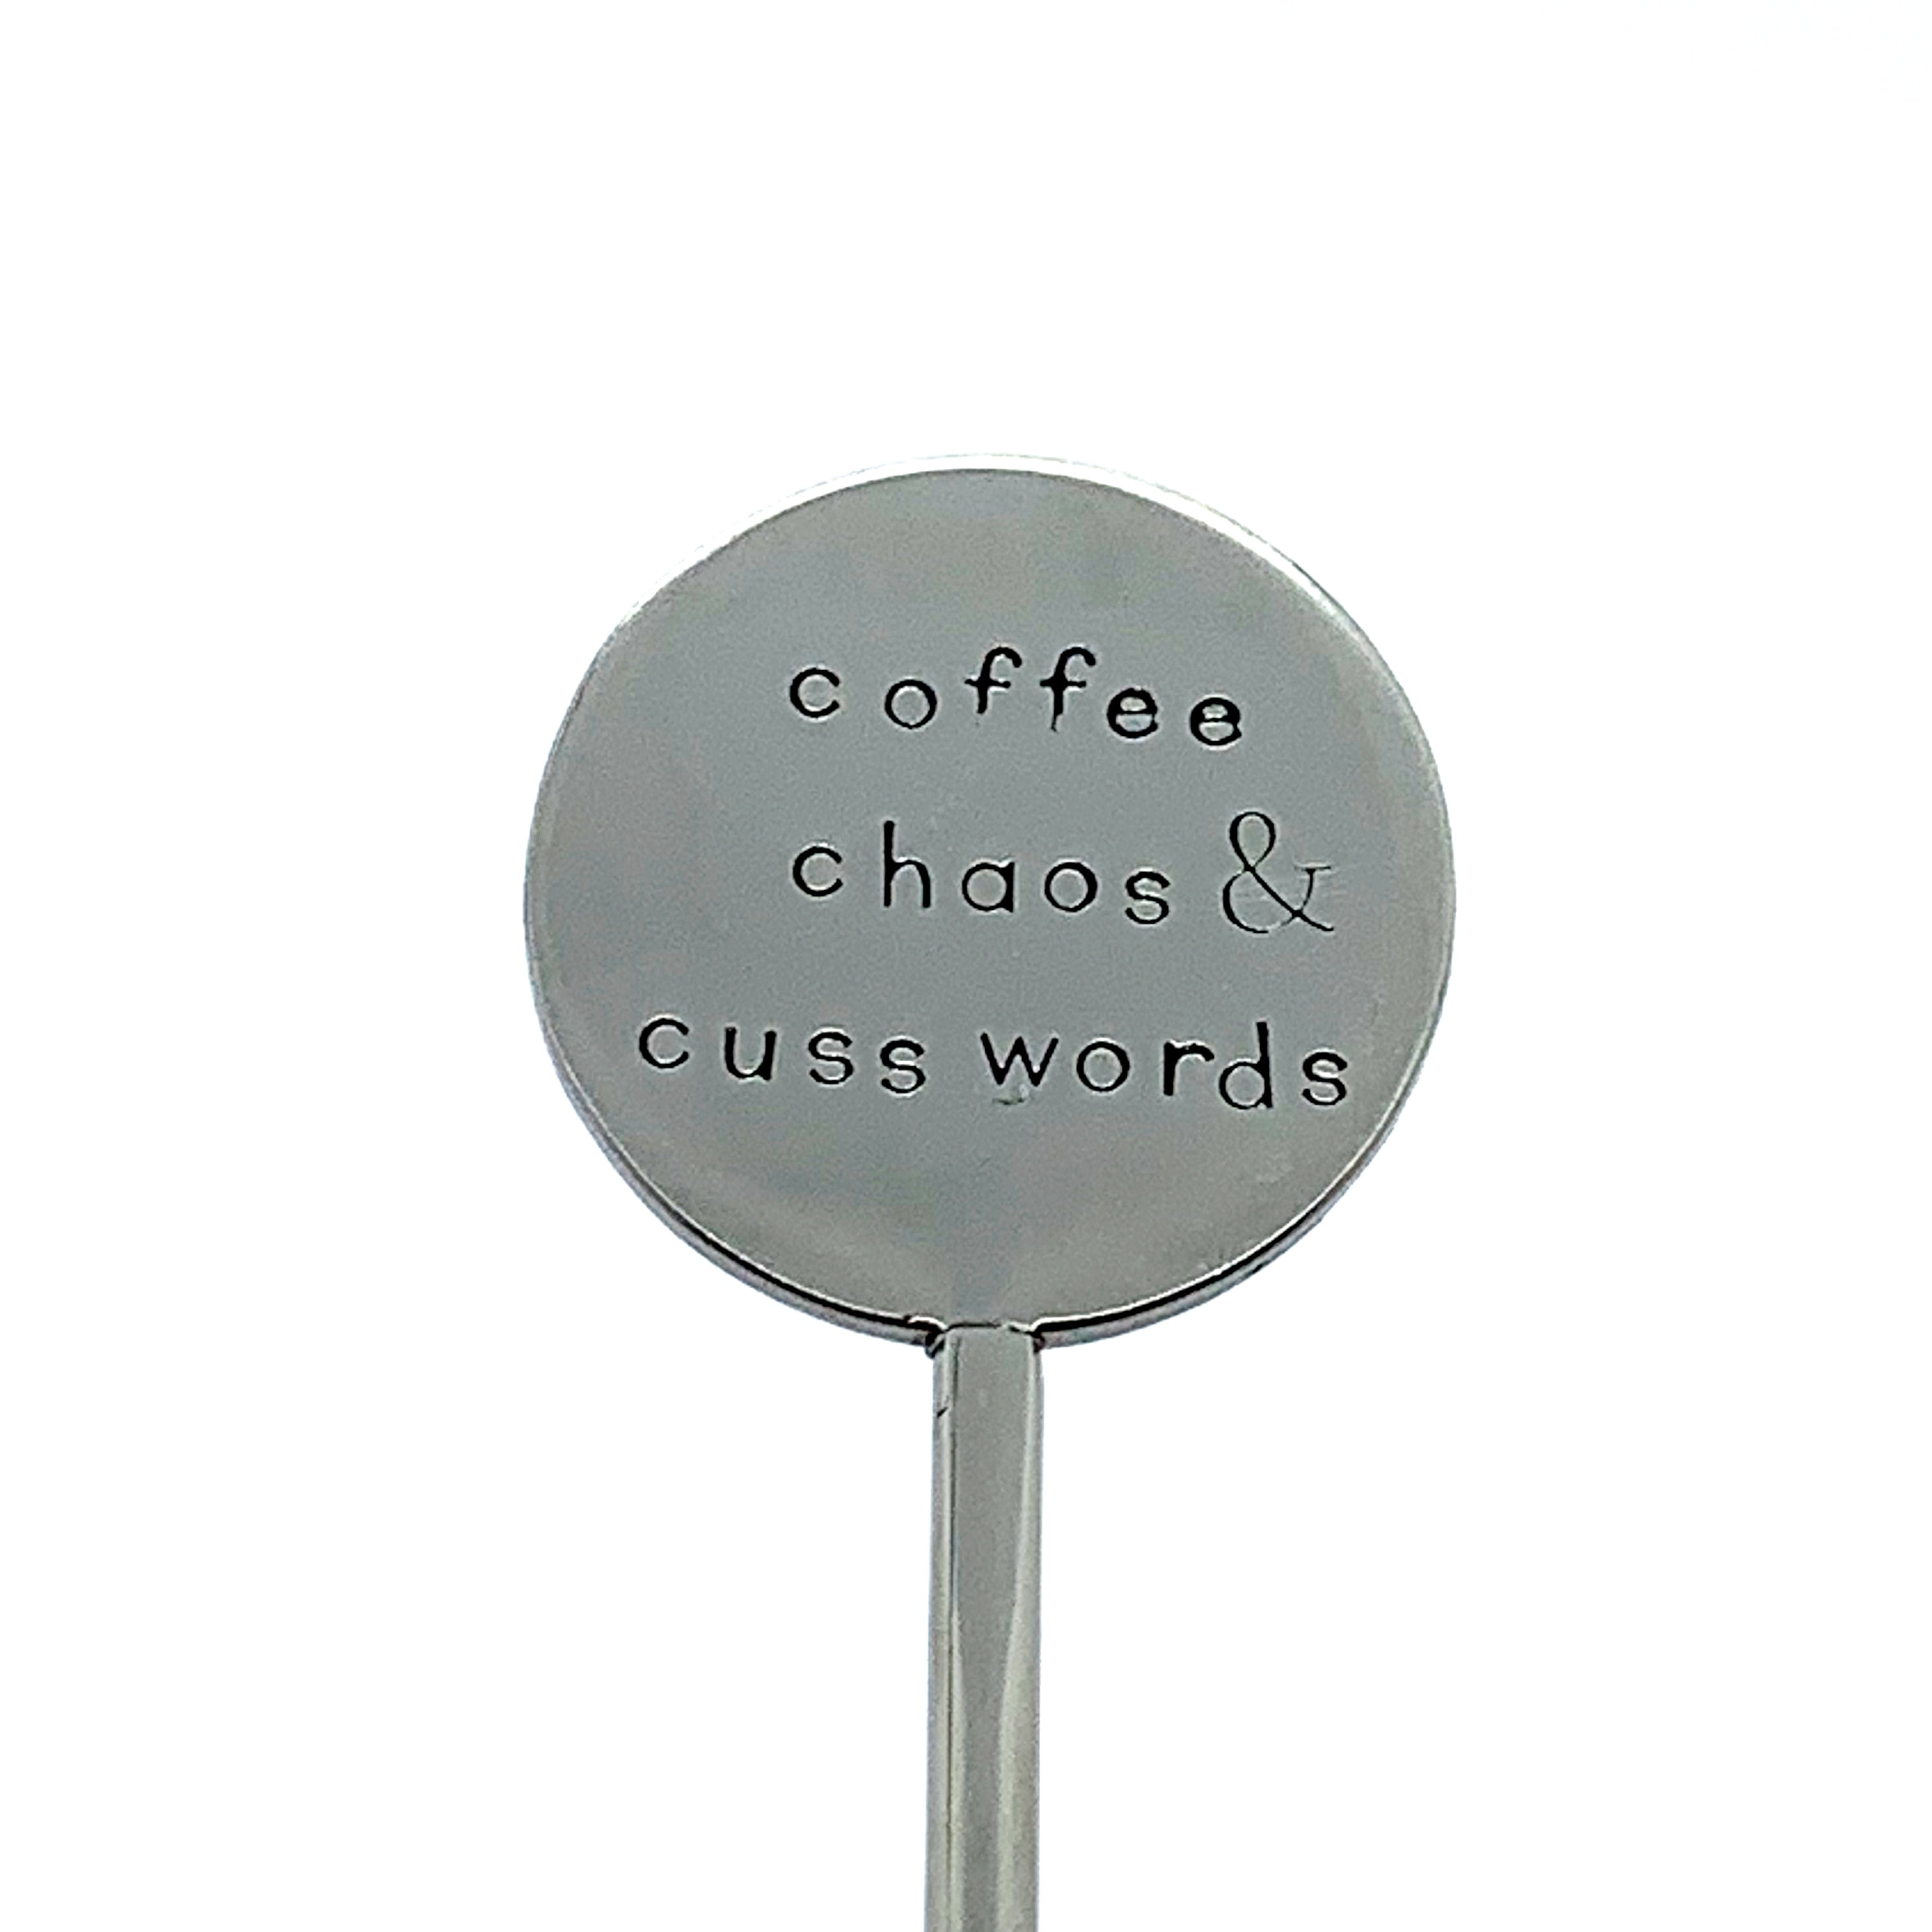 Coffee Stirrer - Coffee, Chaos, & Cuss Words